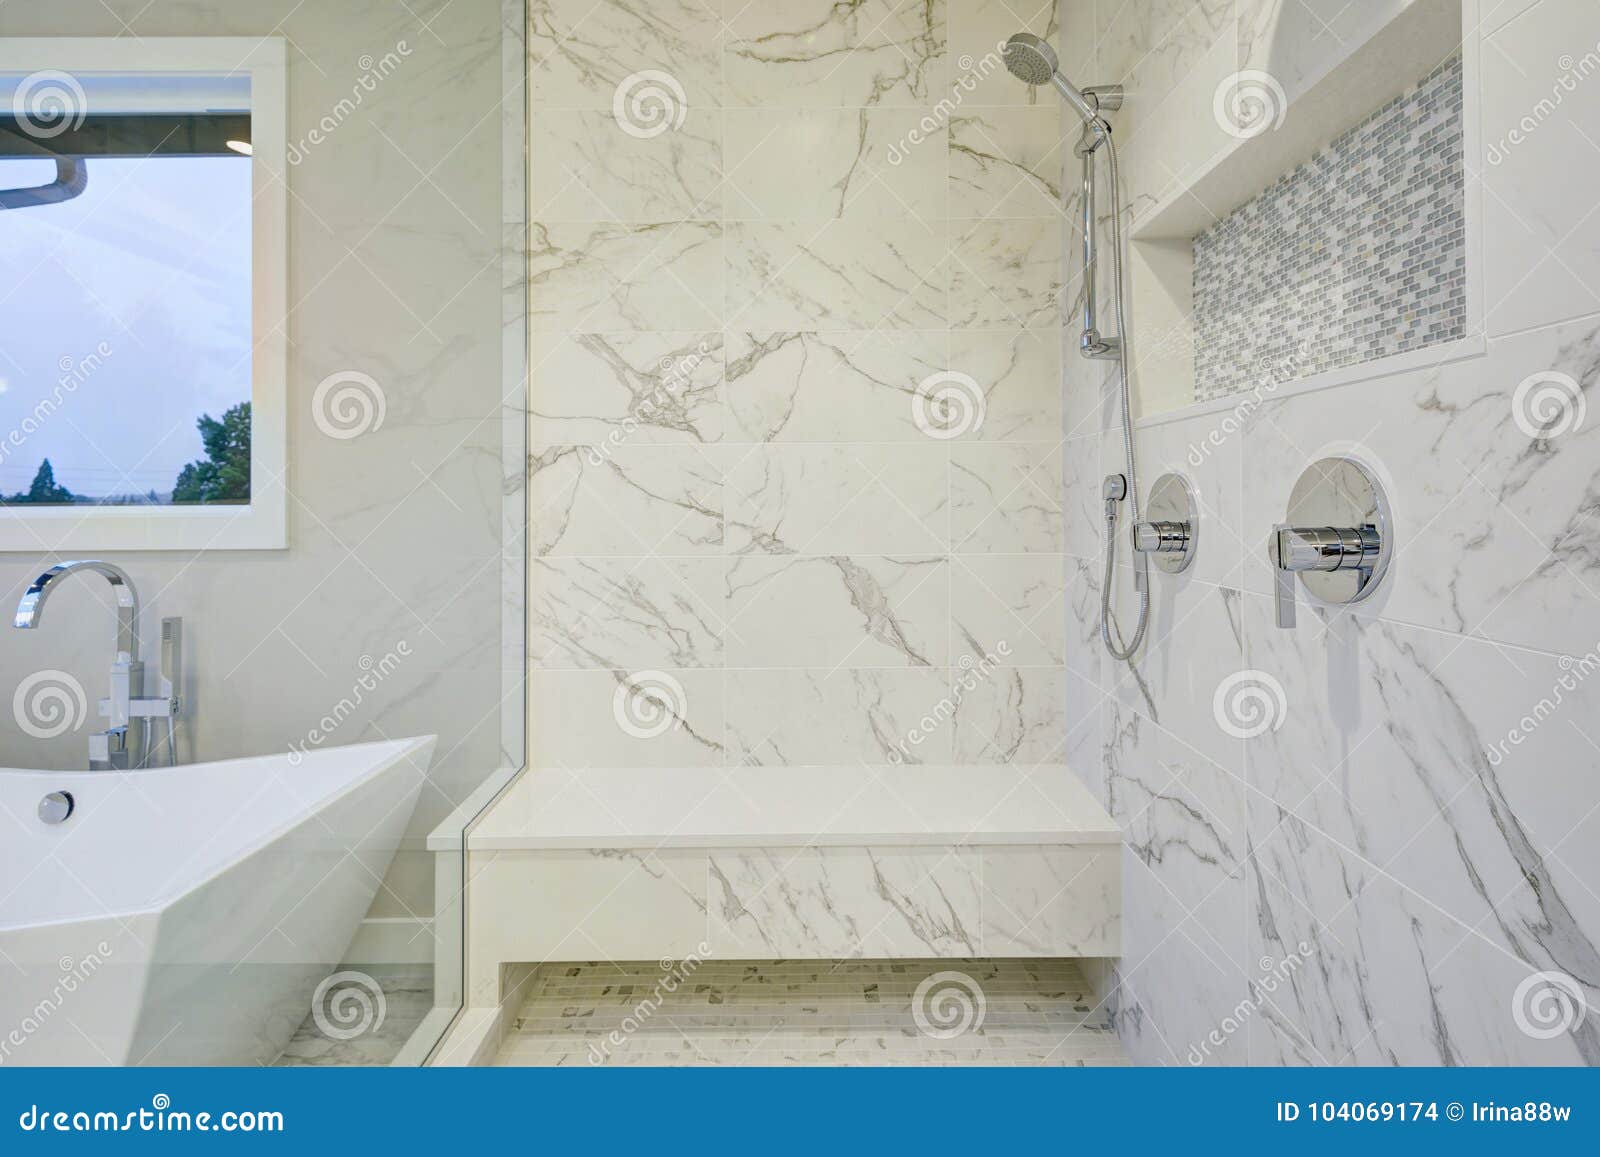 sleek bathroom features marble walk-in shower